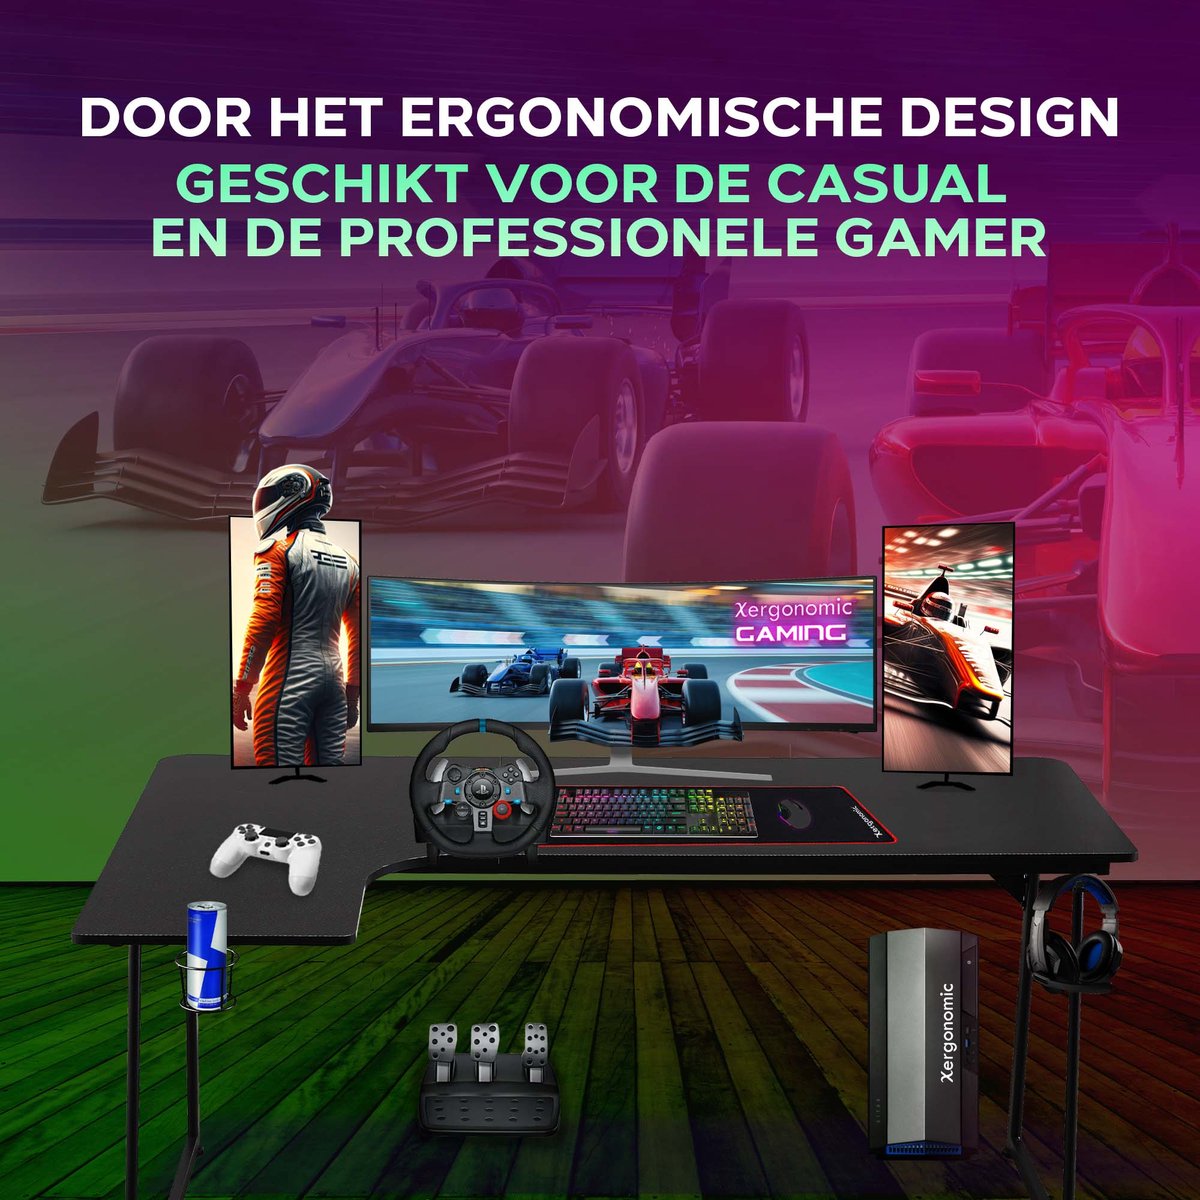 Xergonomic Neon Cyrex Gaming corner desk - D60-100xW40-160xH75 cm - Black